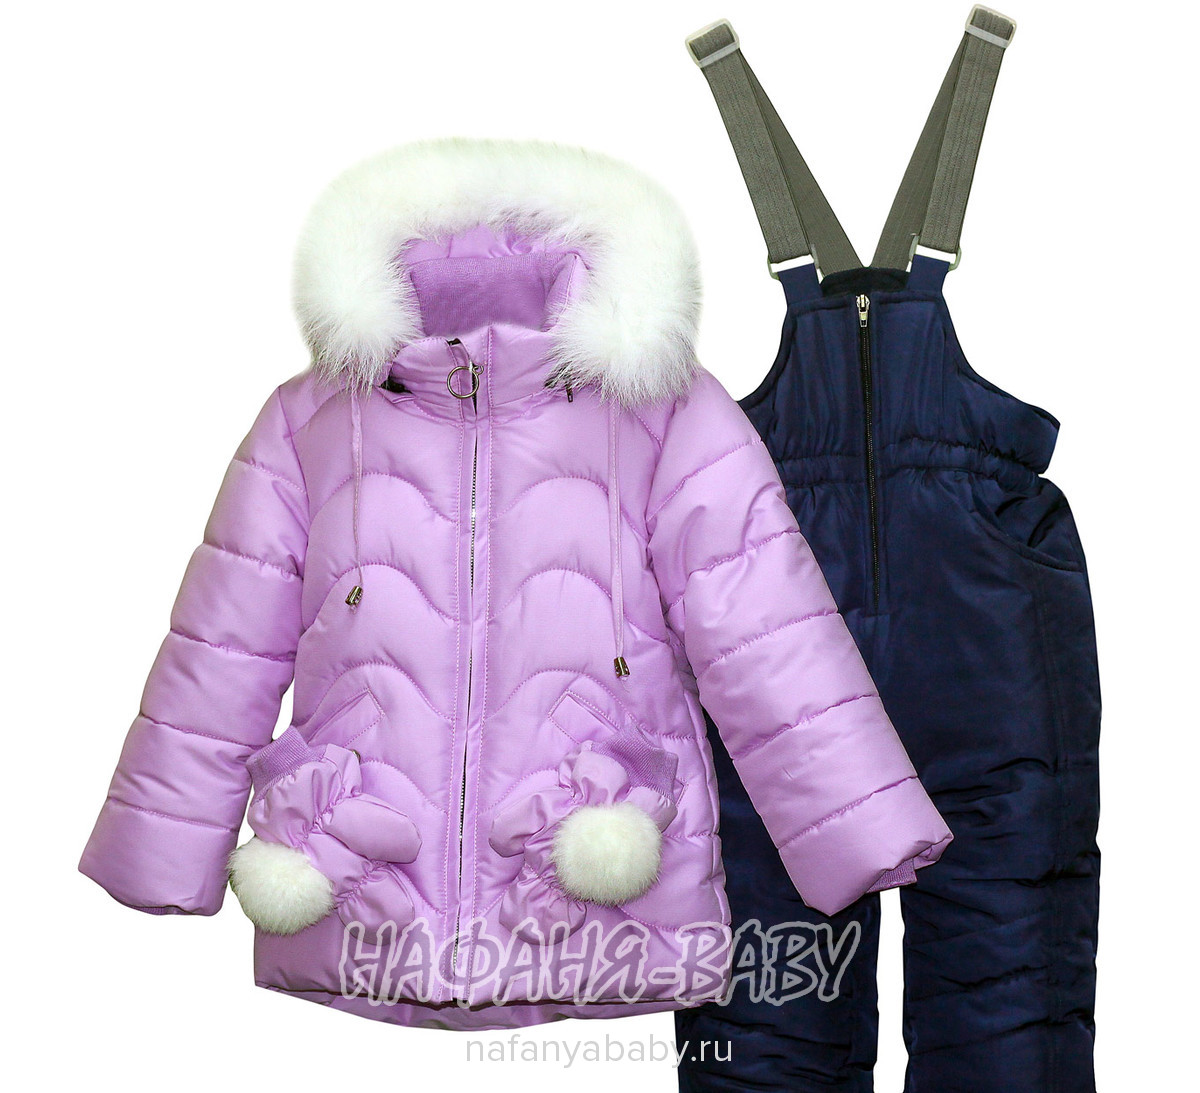 Зимний комплект (куртка+полукомбинезон+варежки) DELFIN-FREE арт: 8821, 1-4 года, оптом Китай (Пекин)